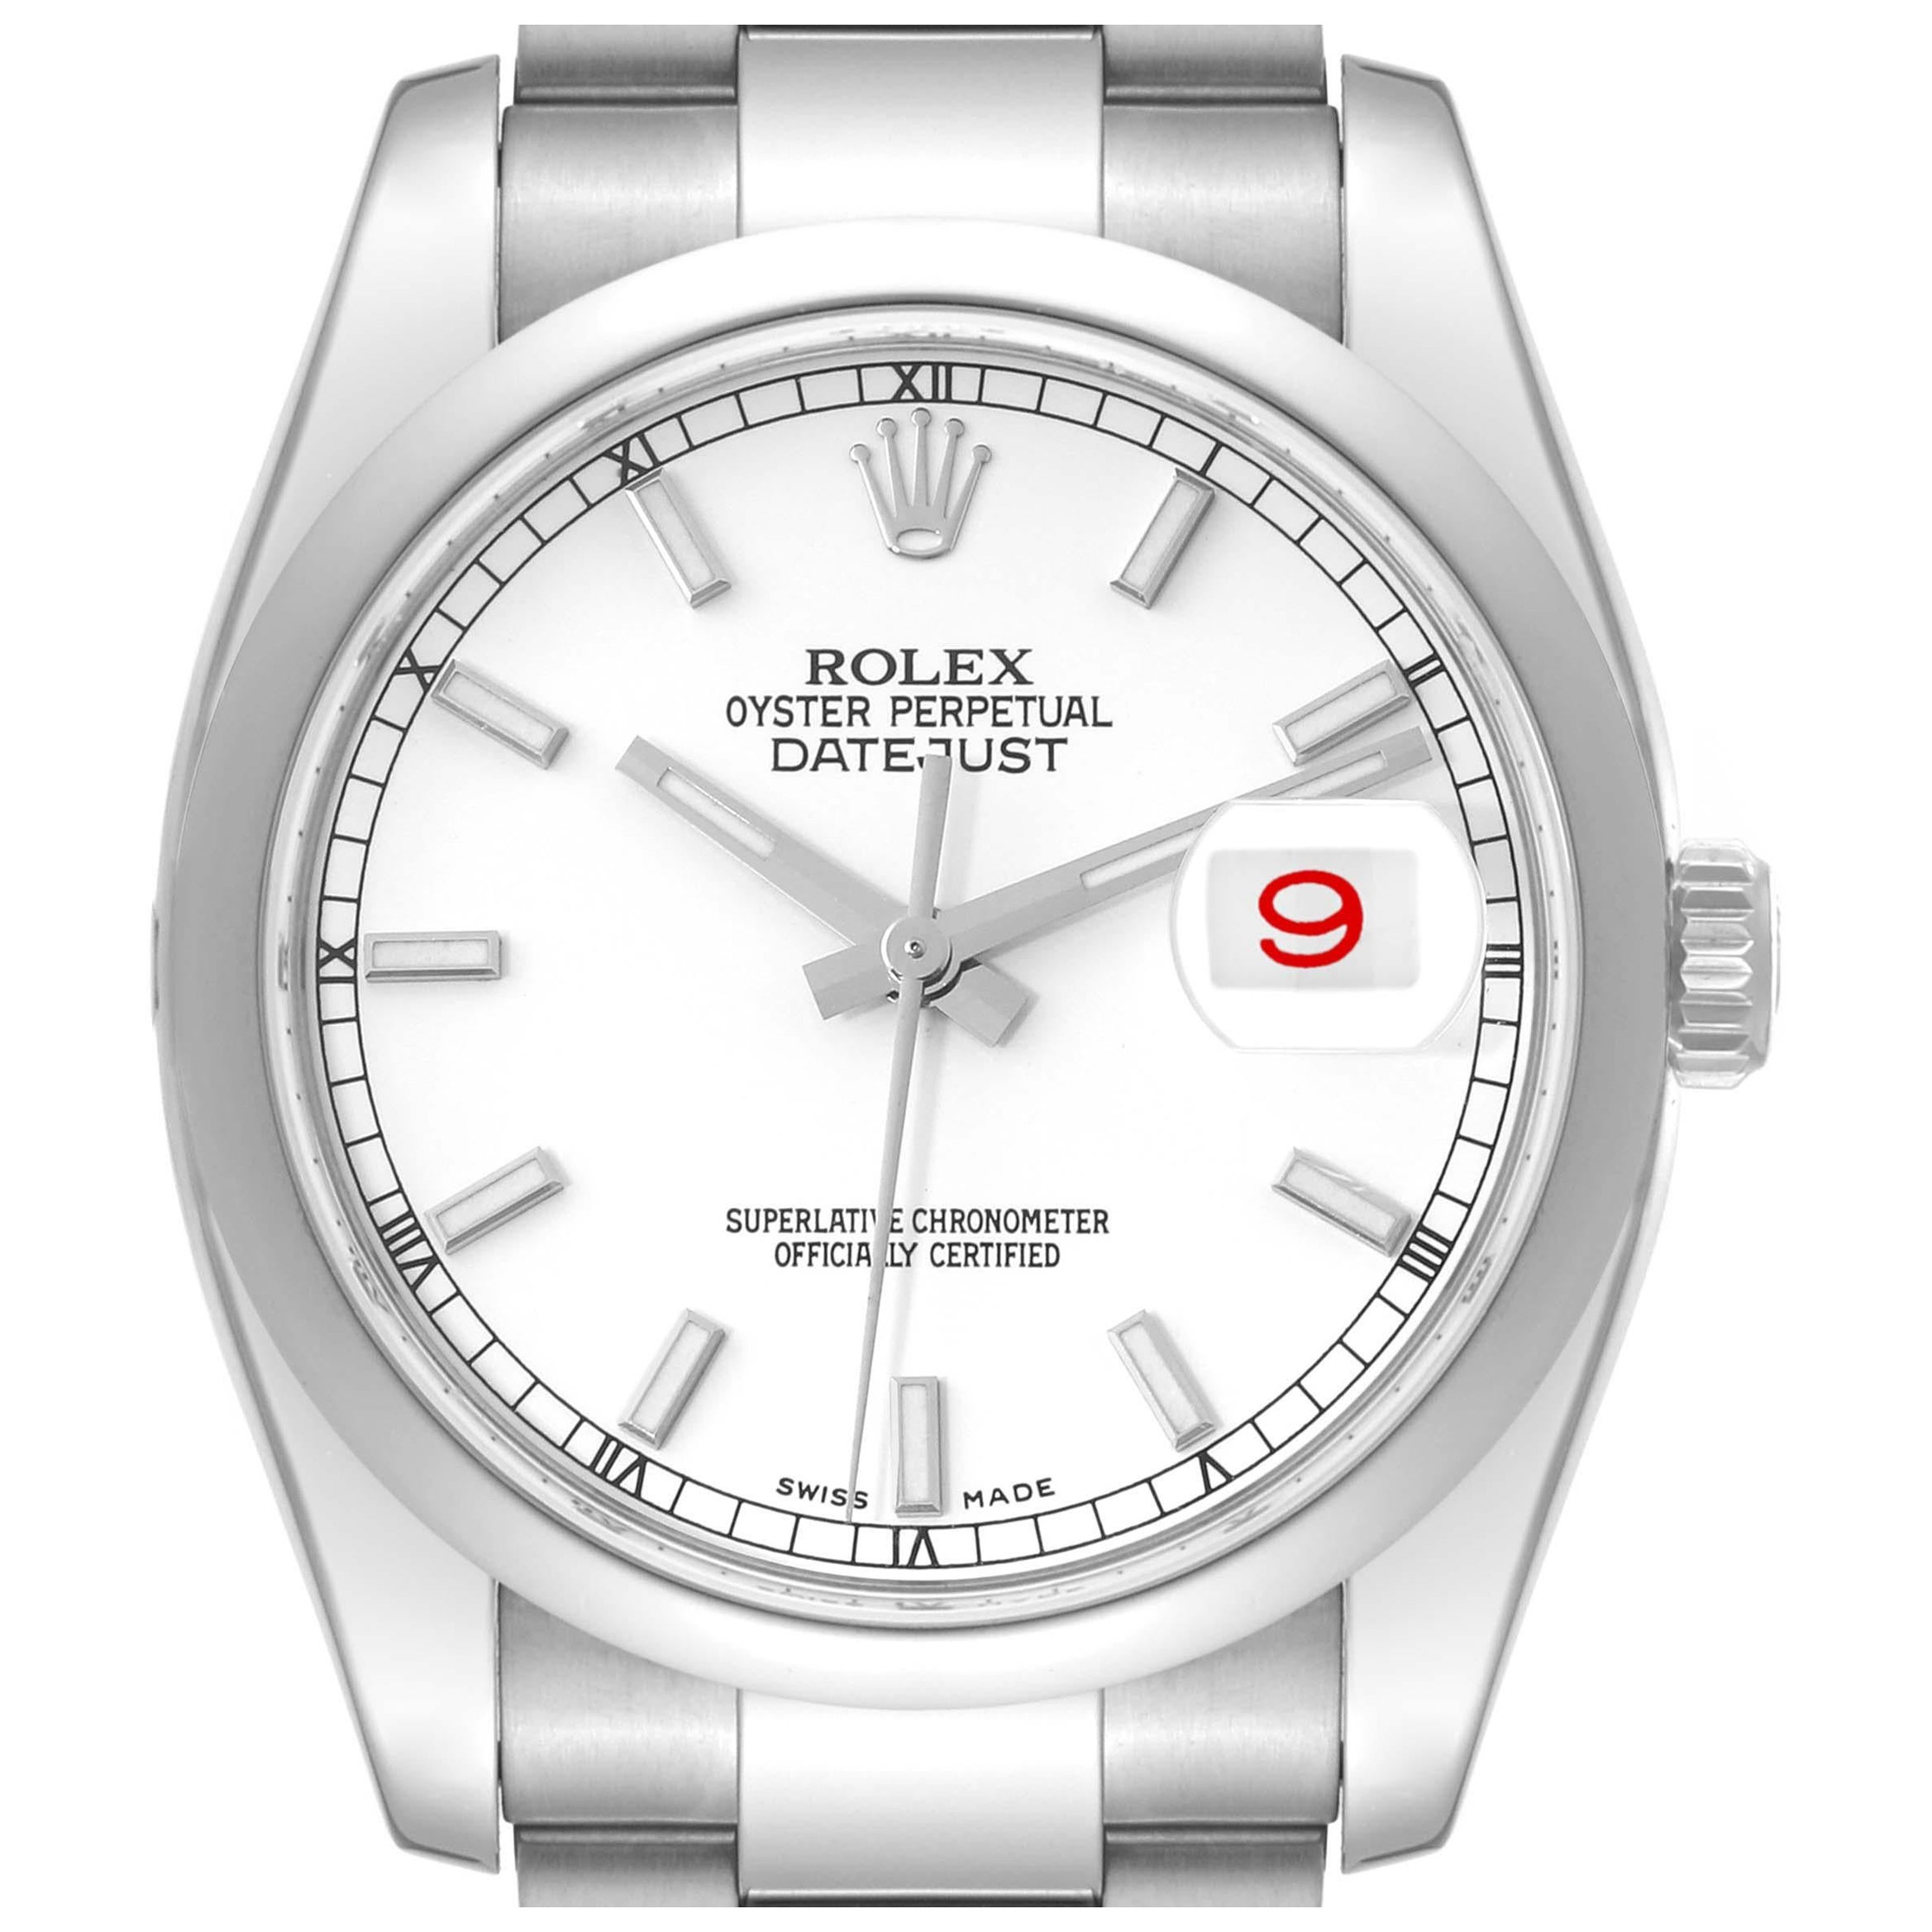 Rolex Datejust White Dial Oyster Bracelet Steel Mens Watch 116200